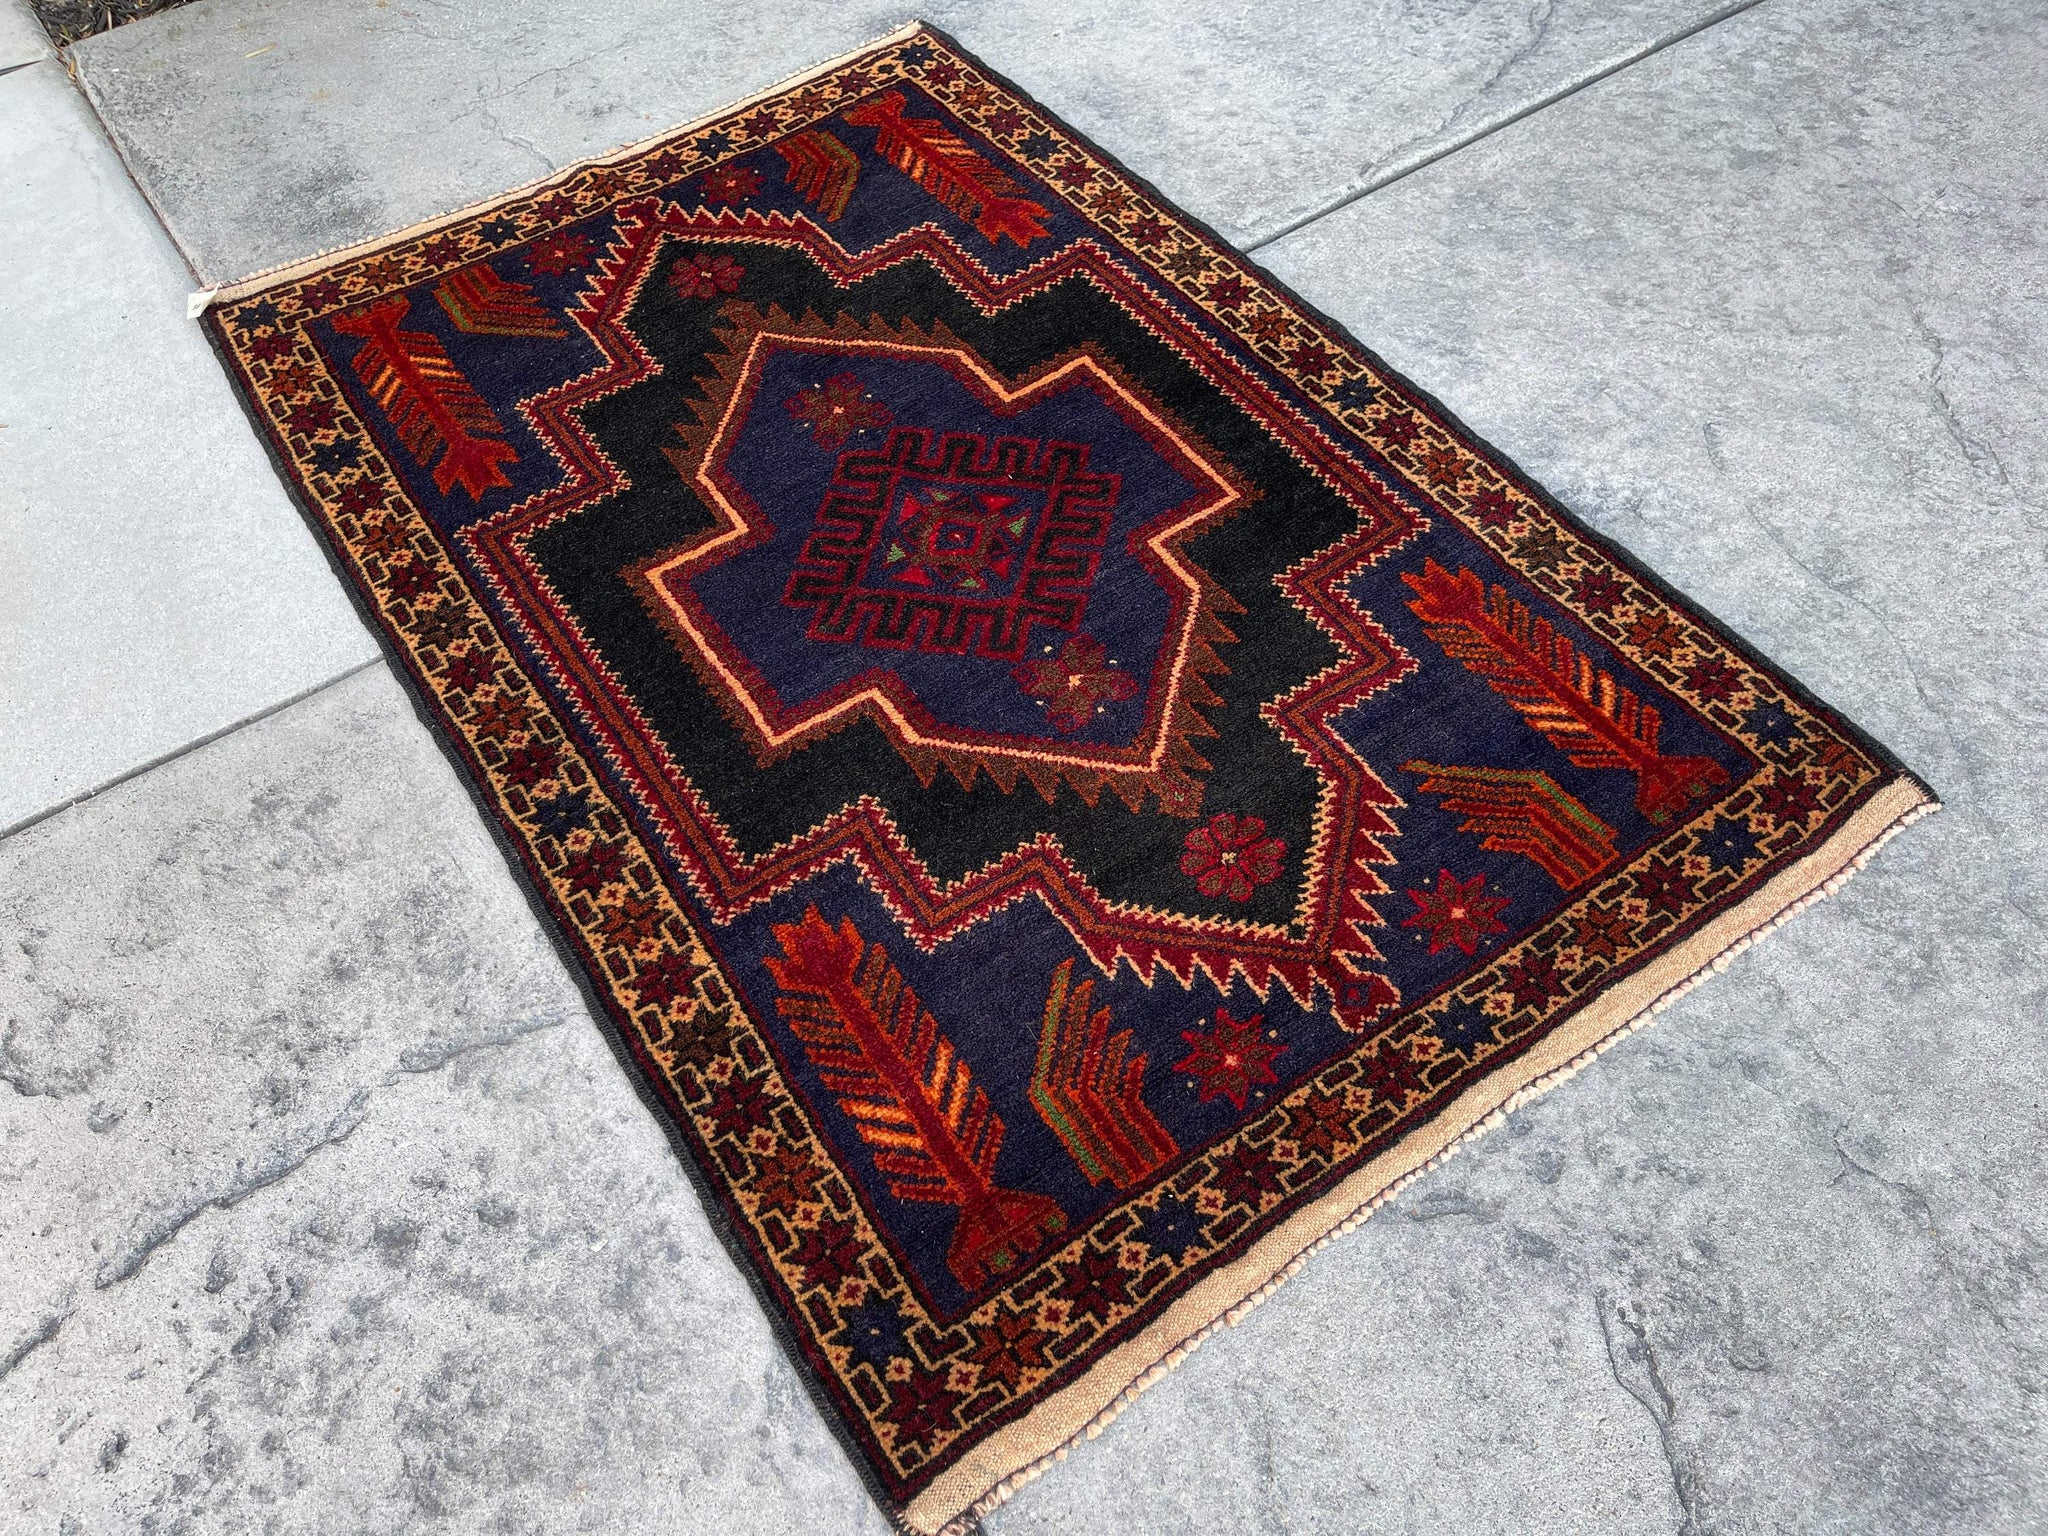 3x5 (90x150) Handmade Afghan Kilim Rug | Red Navy Blue Gold Black | Flatweave Boho Tribal Turkish Moroccan Oriental Wool Outdoor